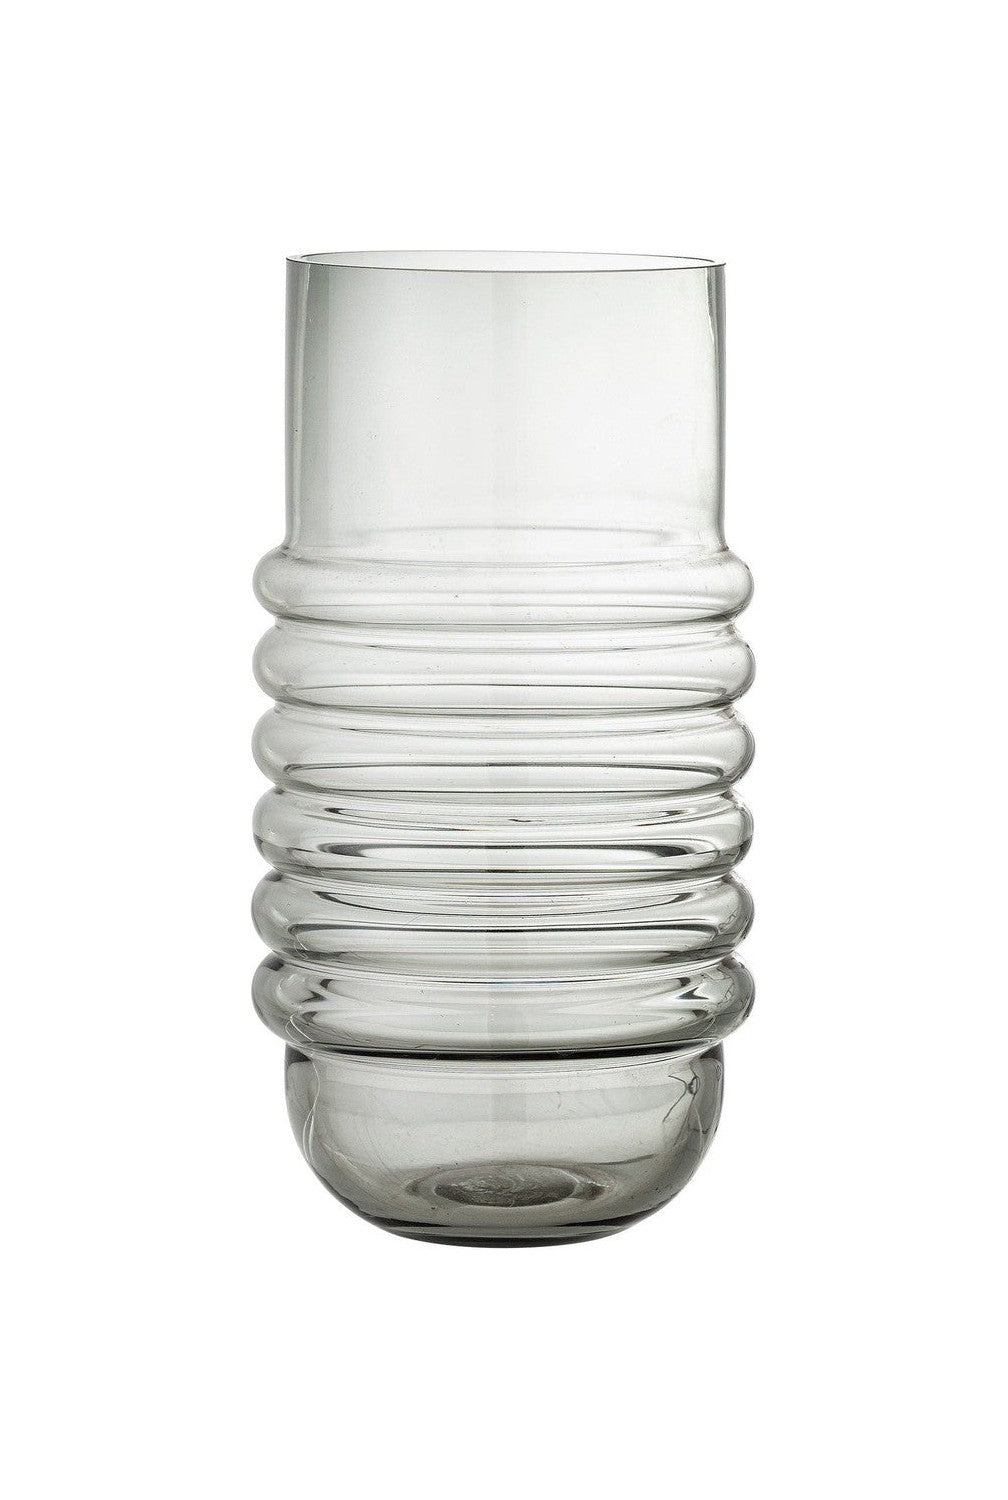 Bloomingville Belma Vase, Gray, Glass